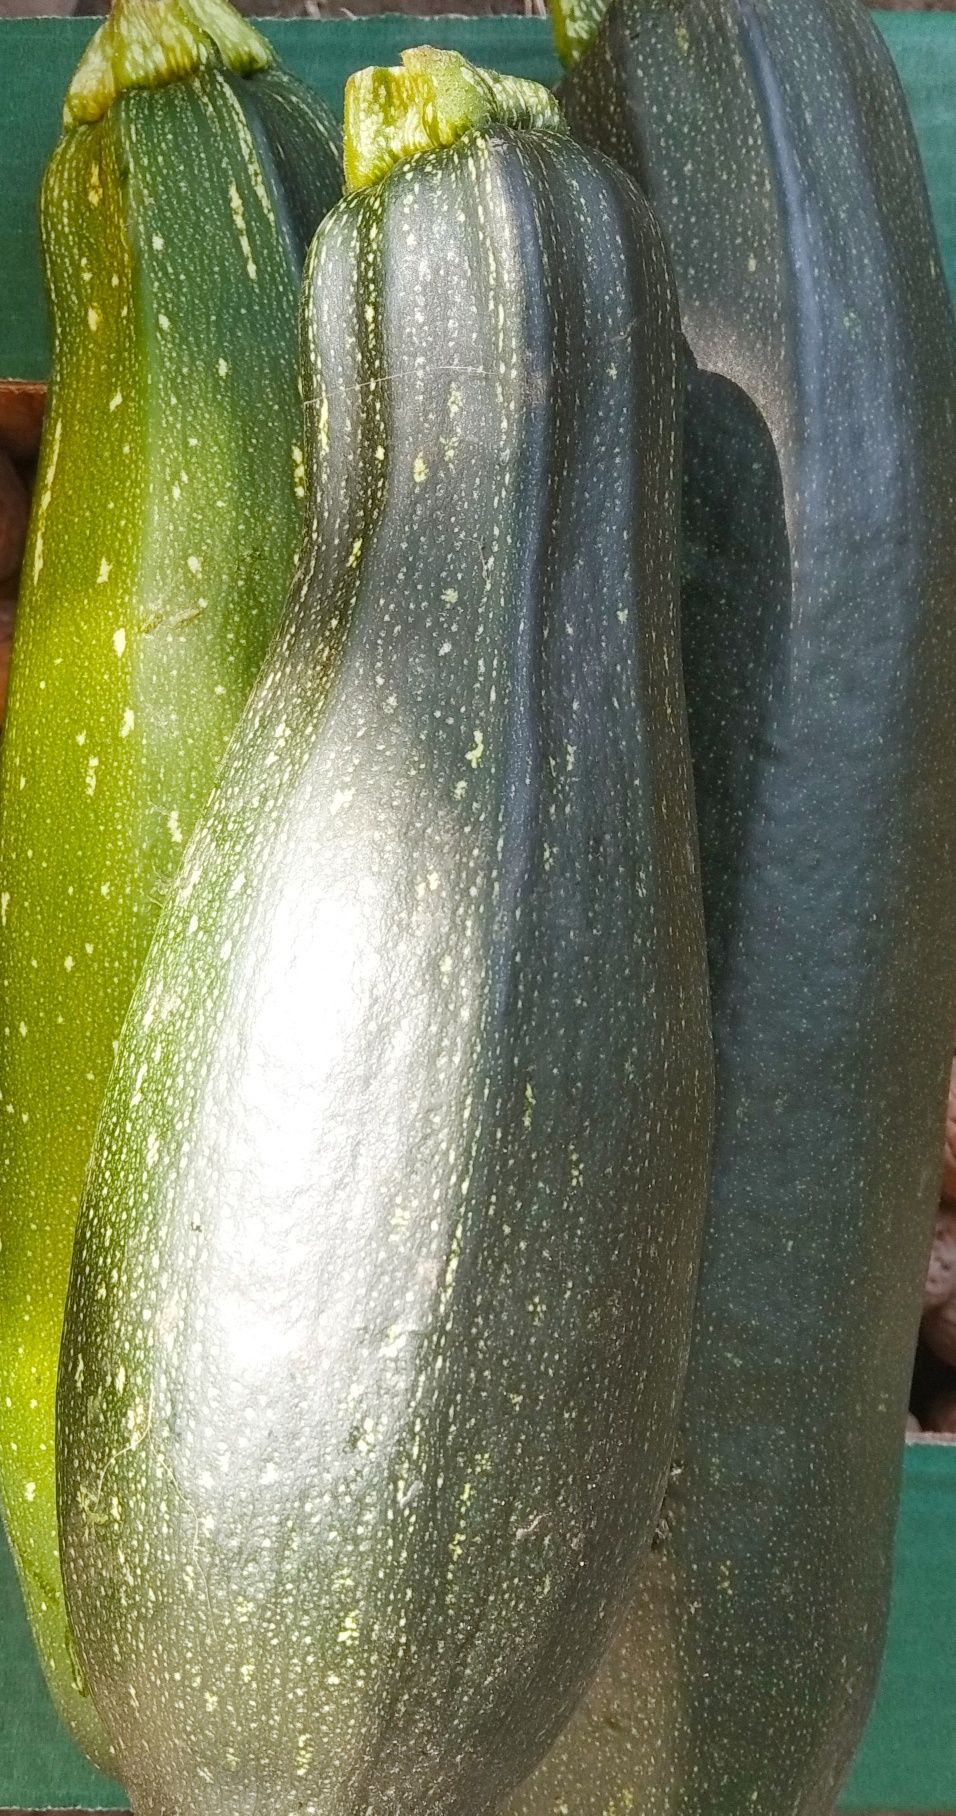 DOVLECEI zucchini